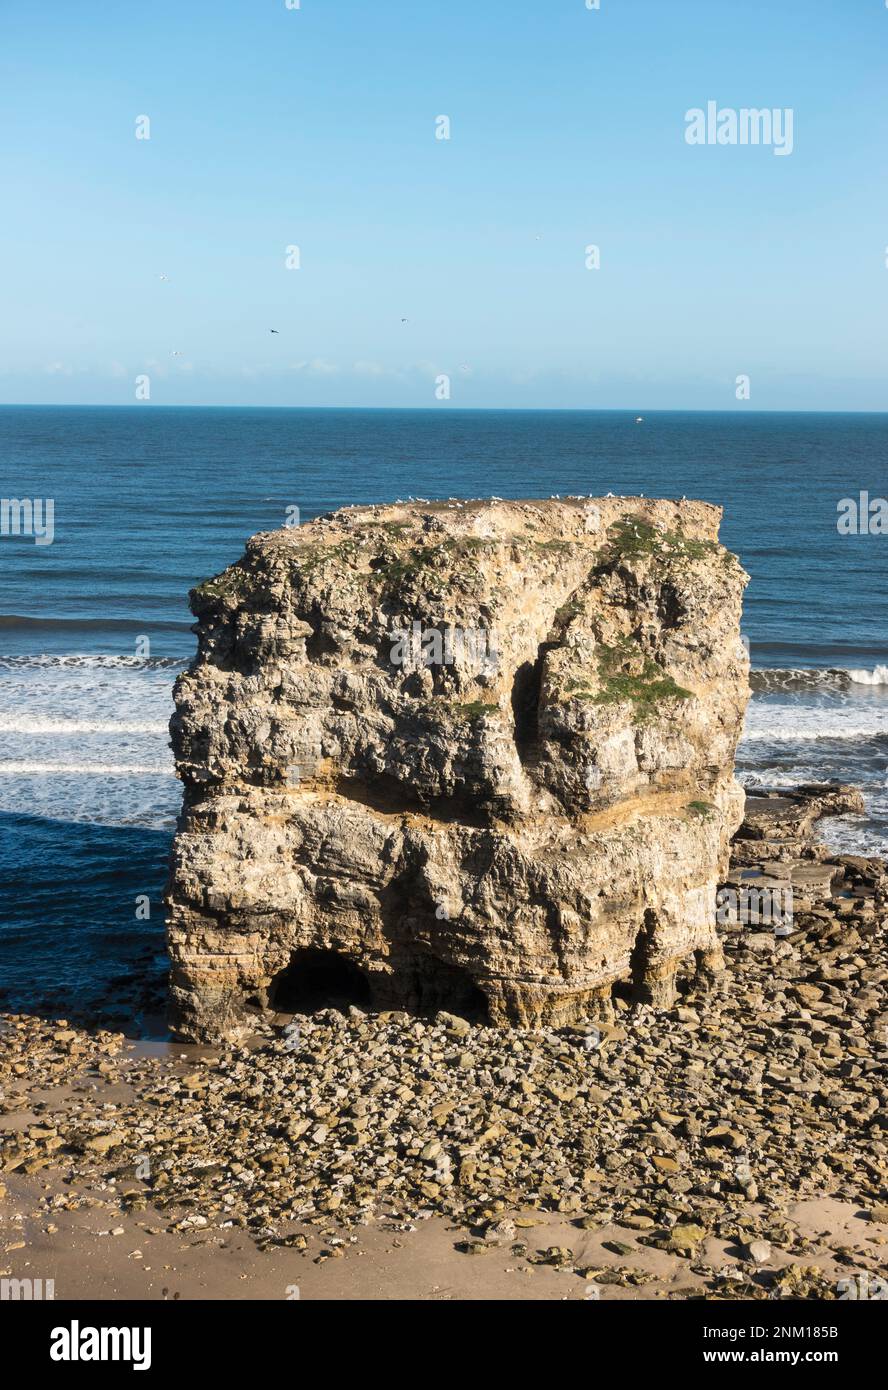 Marsden Rock a magnesian limestone sea stack within Marsden Bay, north east England, UK Stock Photo